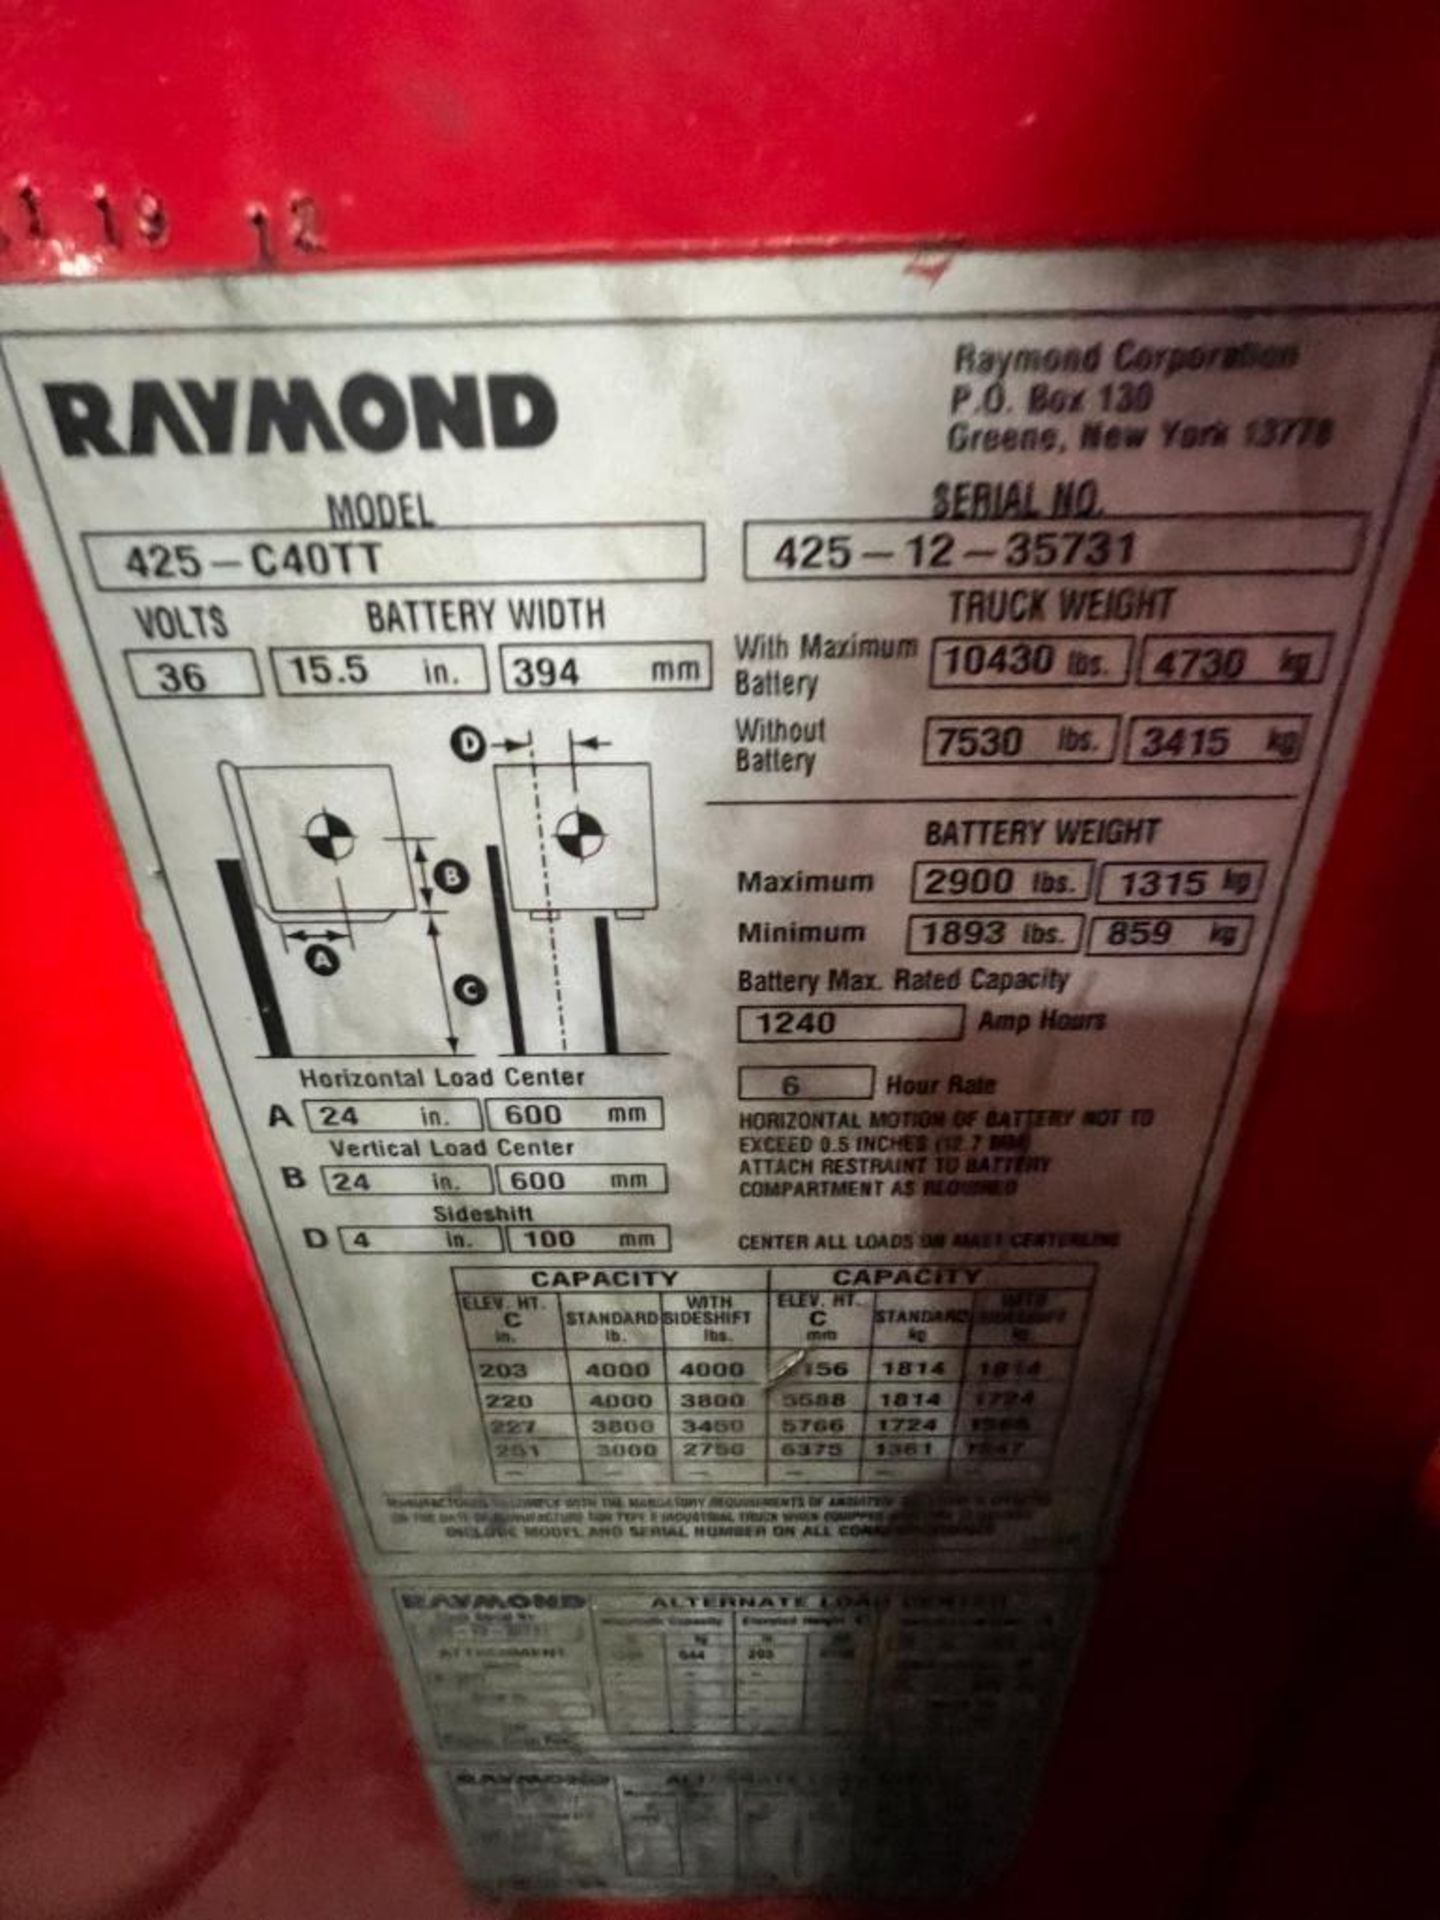 Raymond 4,000 LB. Stand-Up Forklift, Side Shift, Model 425- C40TT, S/N 425-12-35731, HD Hours 8,966 - Image 6 of 6